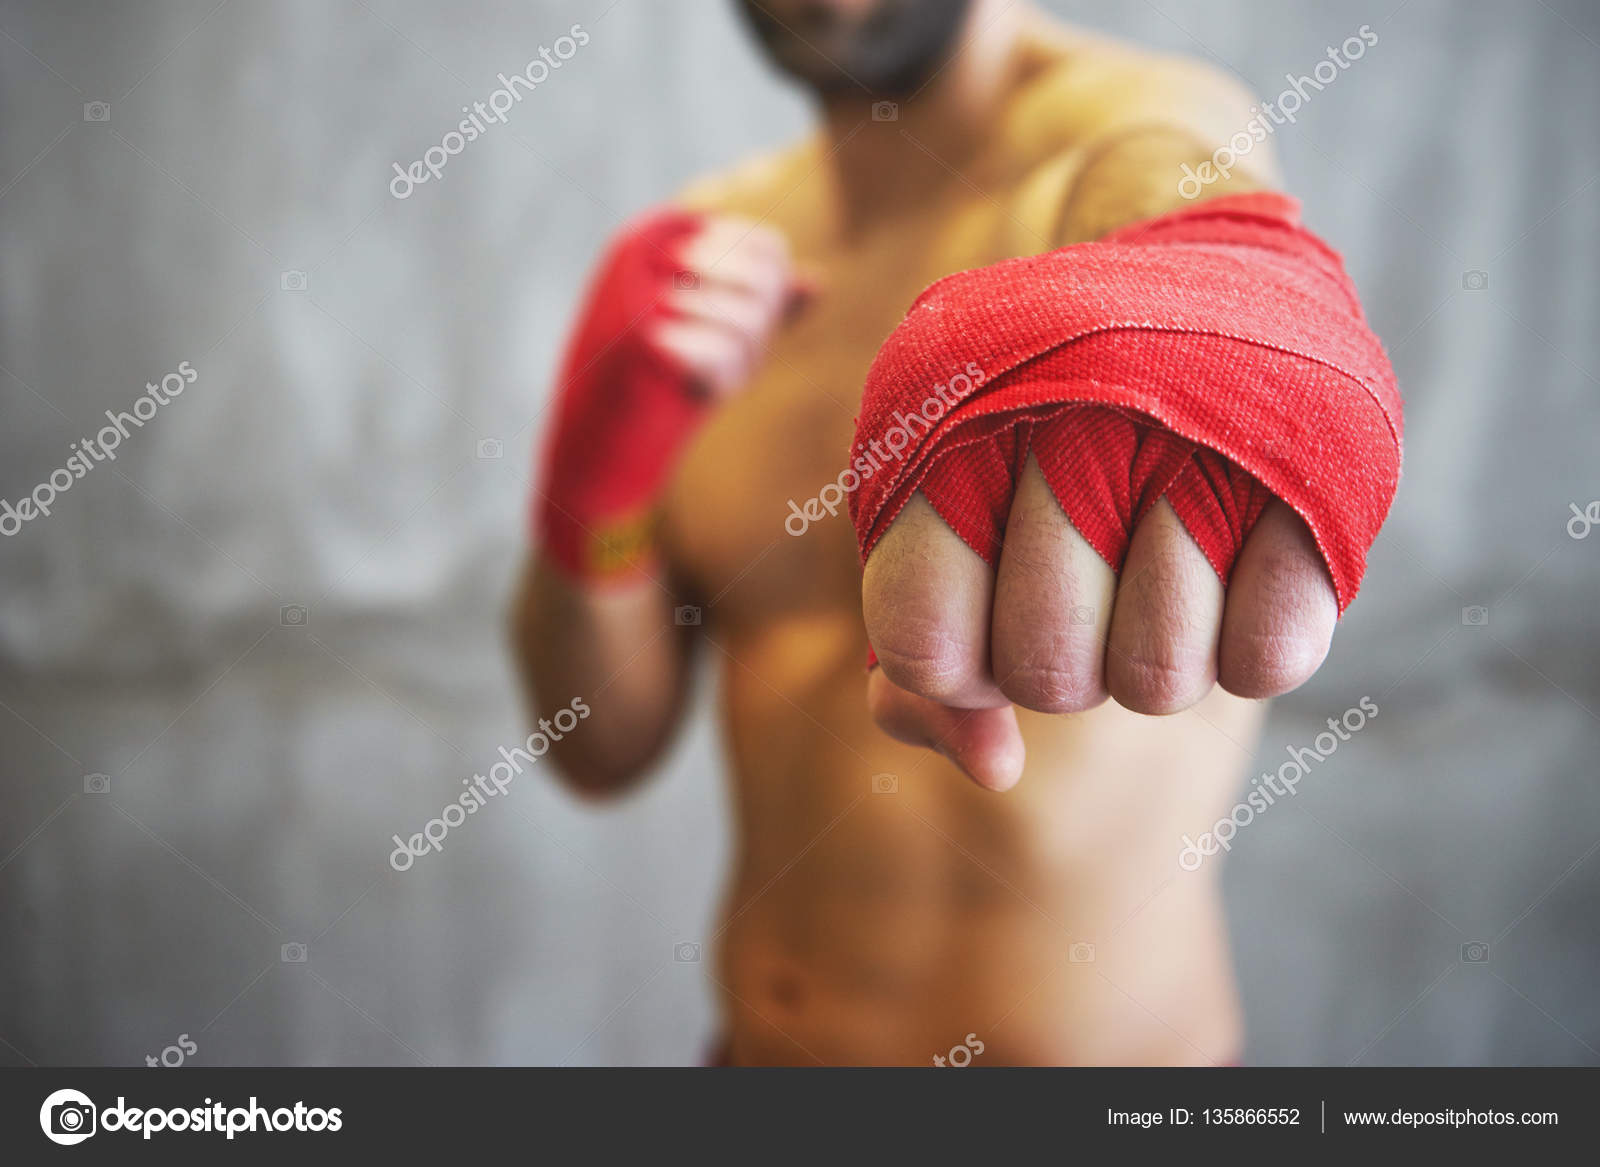 Disparo de manos envueltas con cinta de boxeo roja de pelea de boxeadores  jóvenes: fotografía de stock © chatsimo #135866552